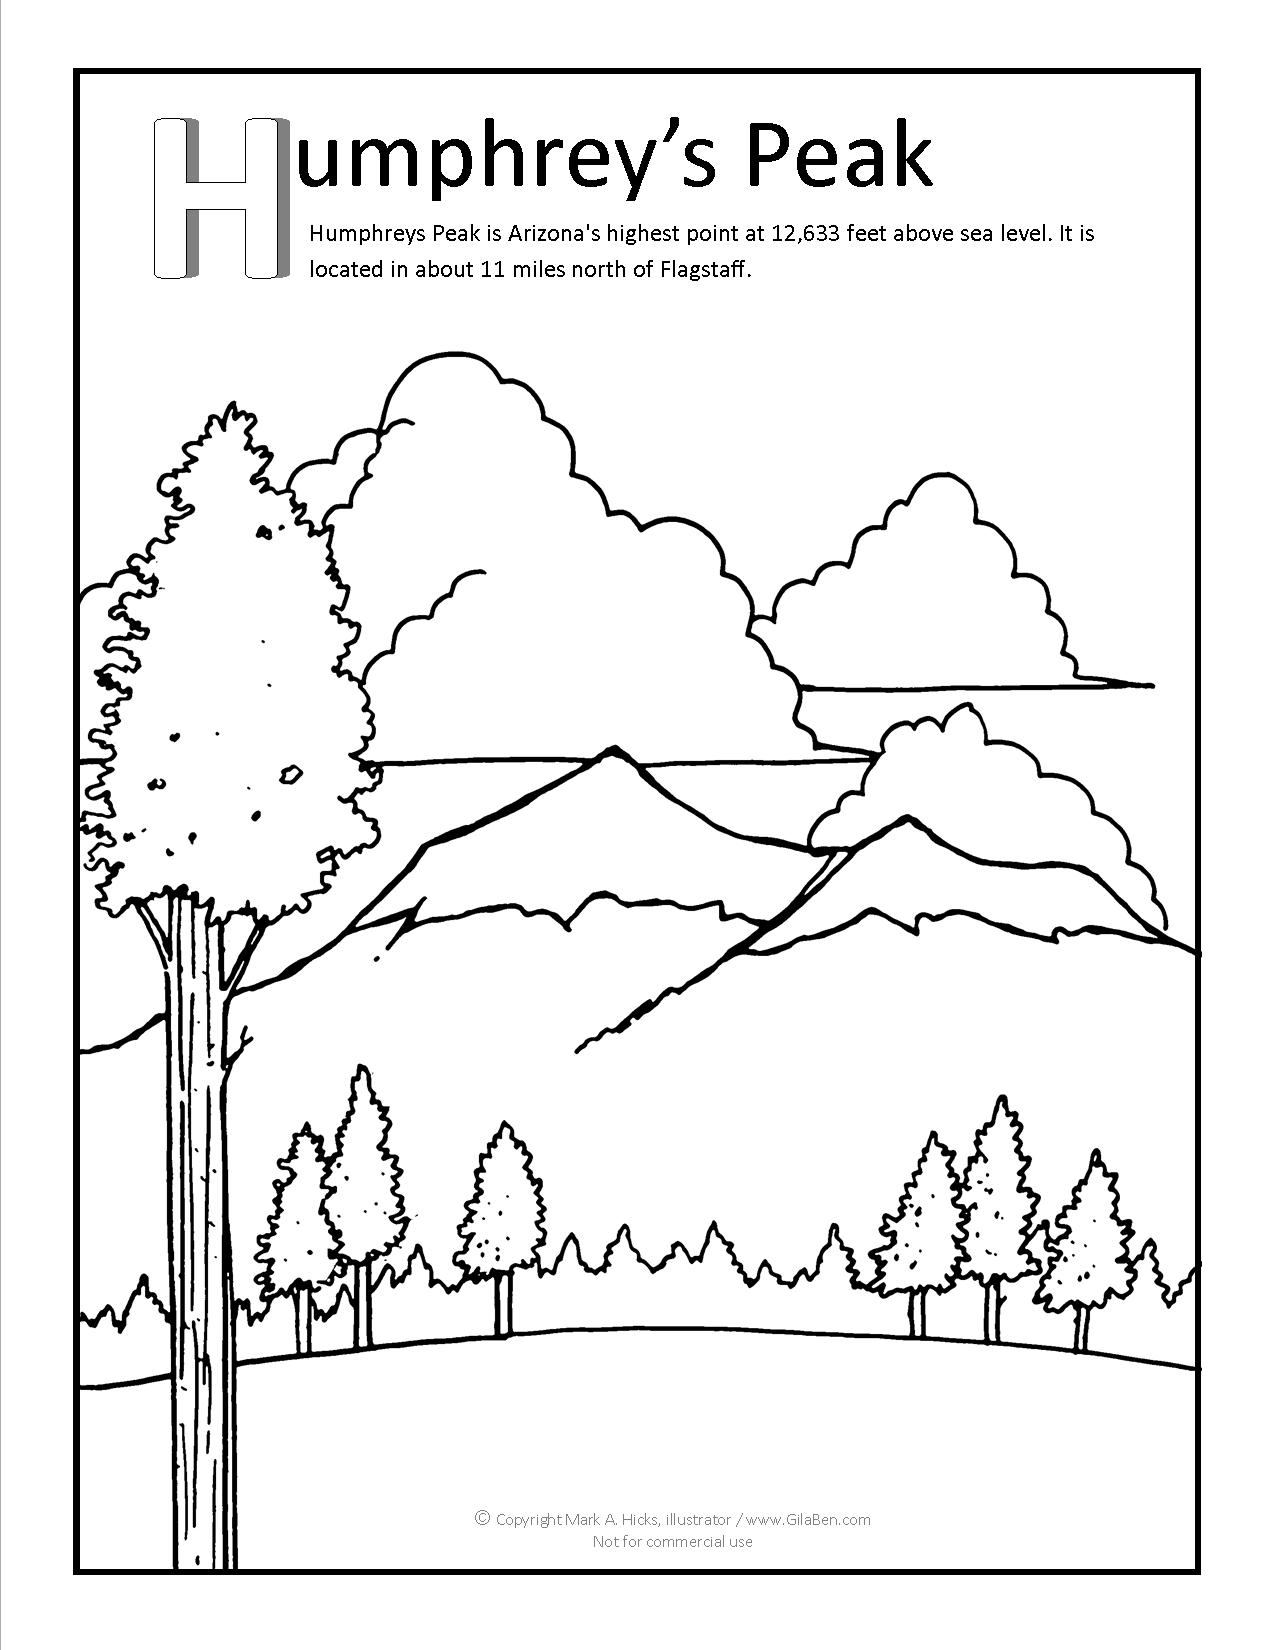 Humphrey Peak Coloring page